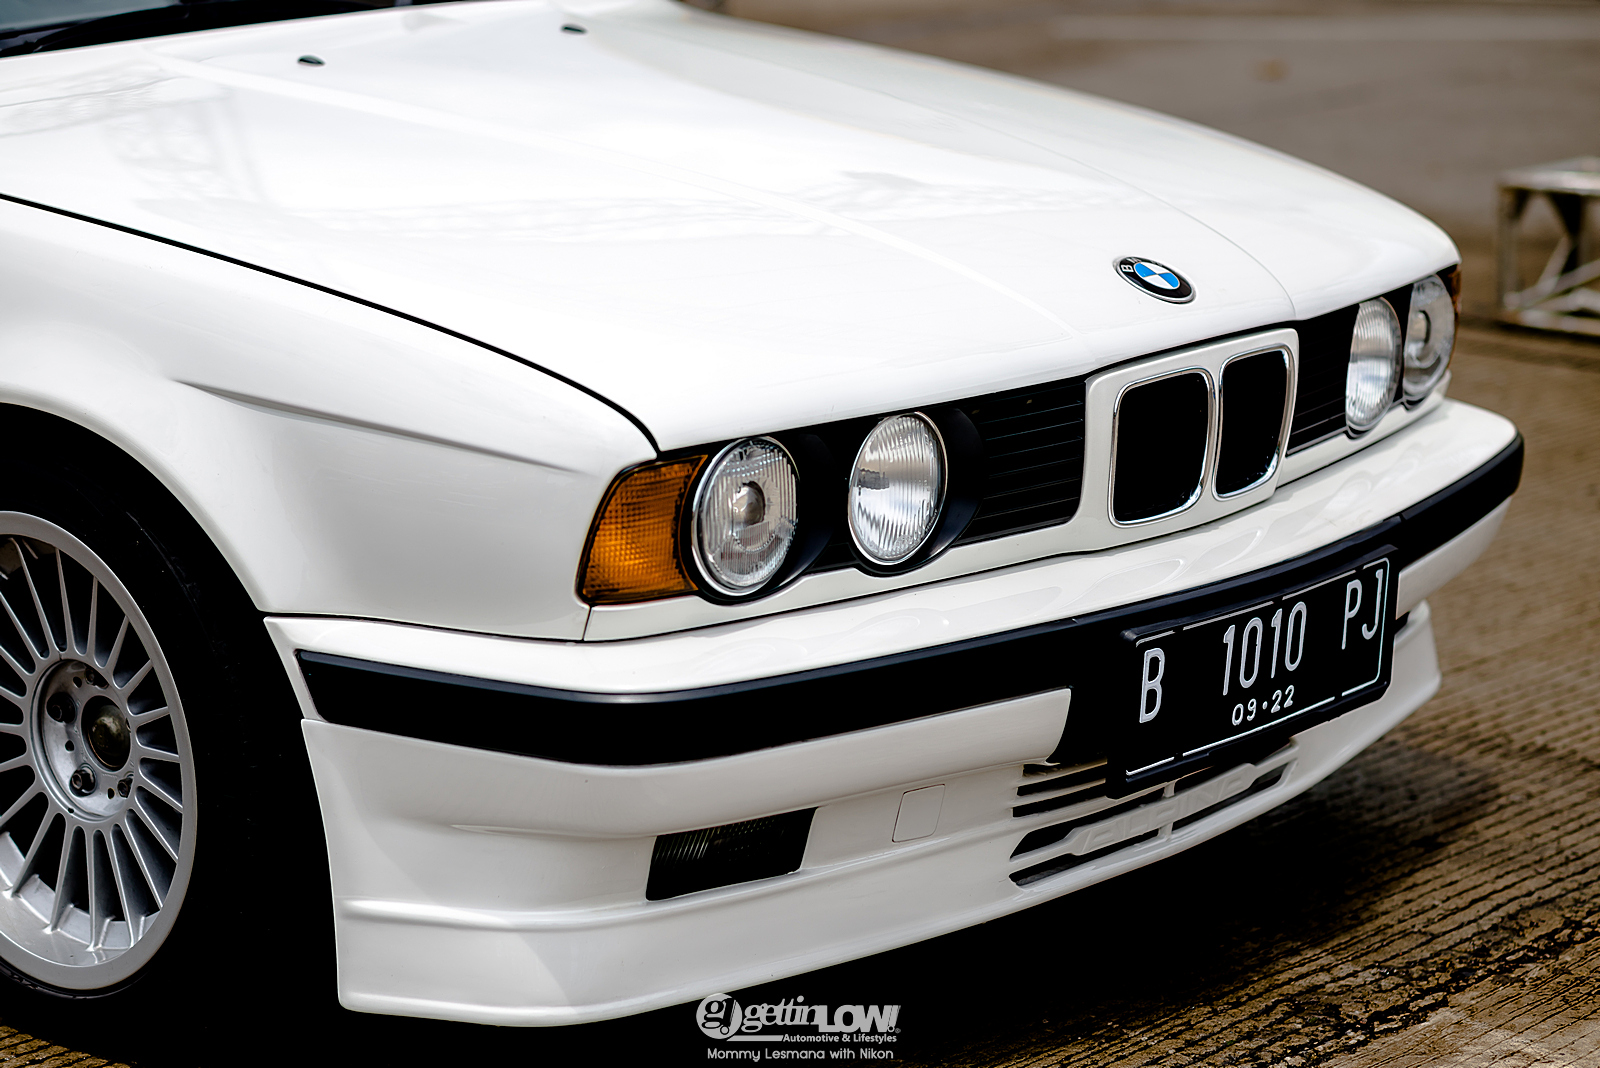 ANDRE IRAWAN BMW E34